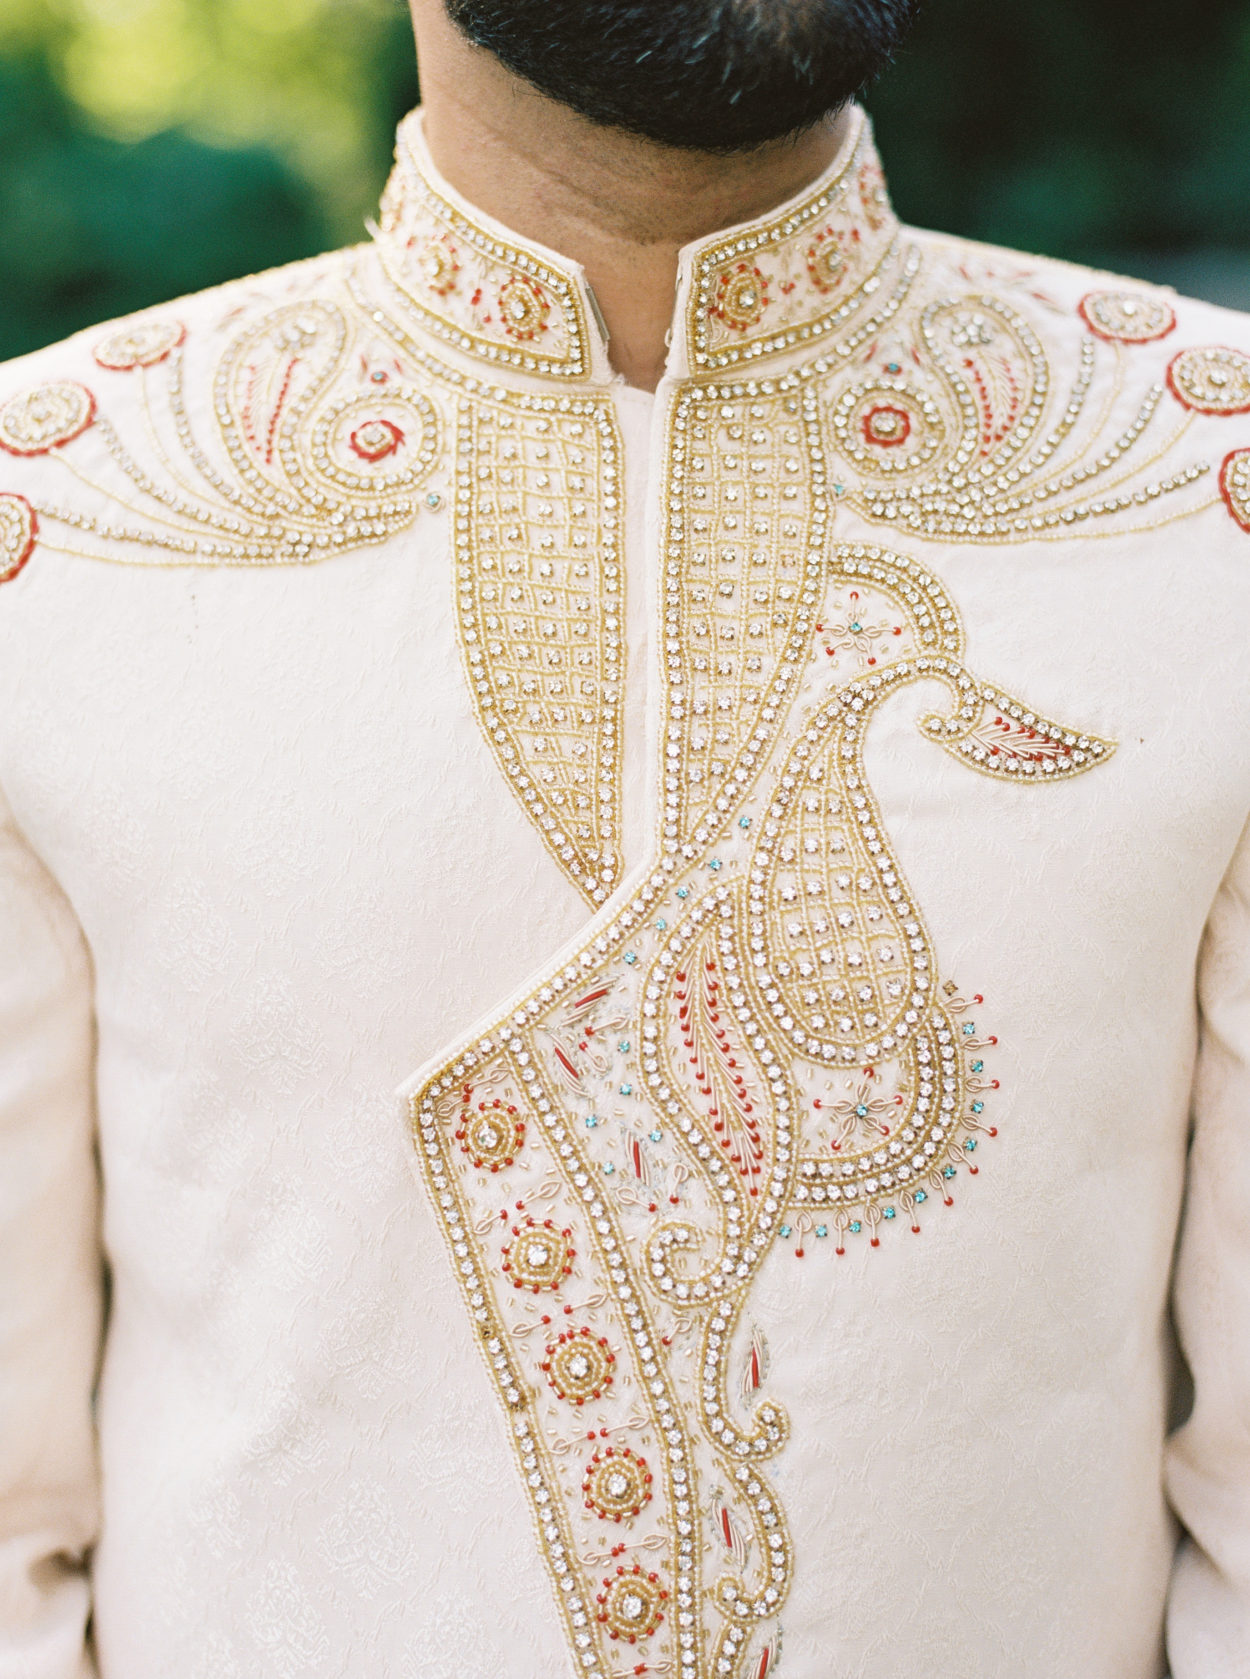 Modern groom's attire for Nashville Indian wedding